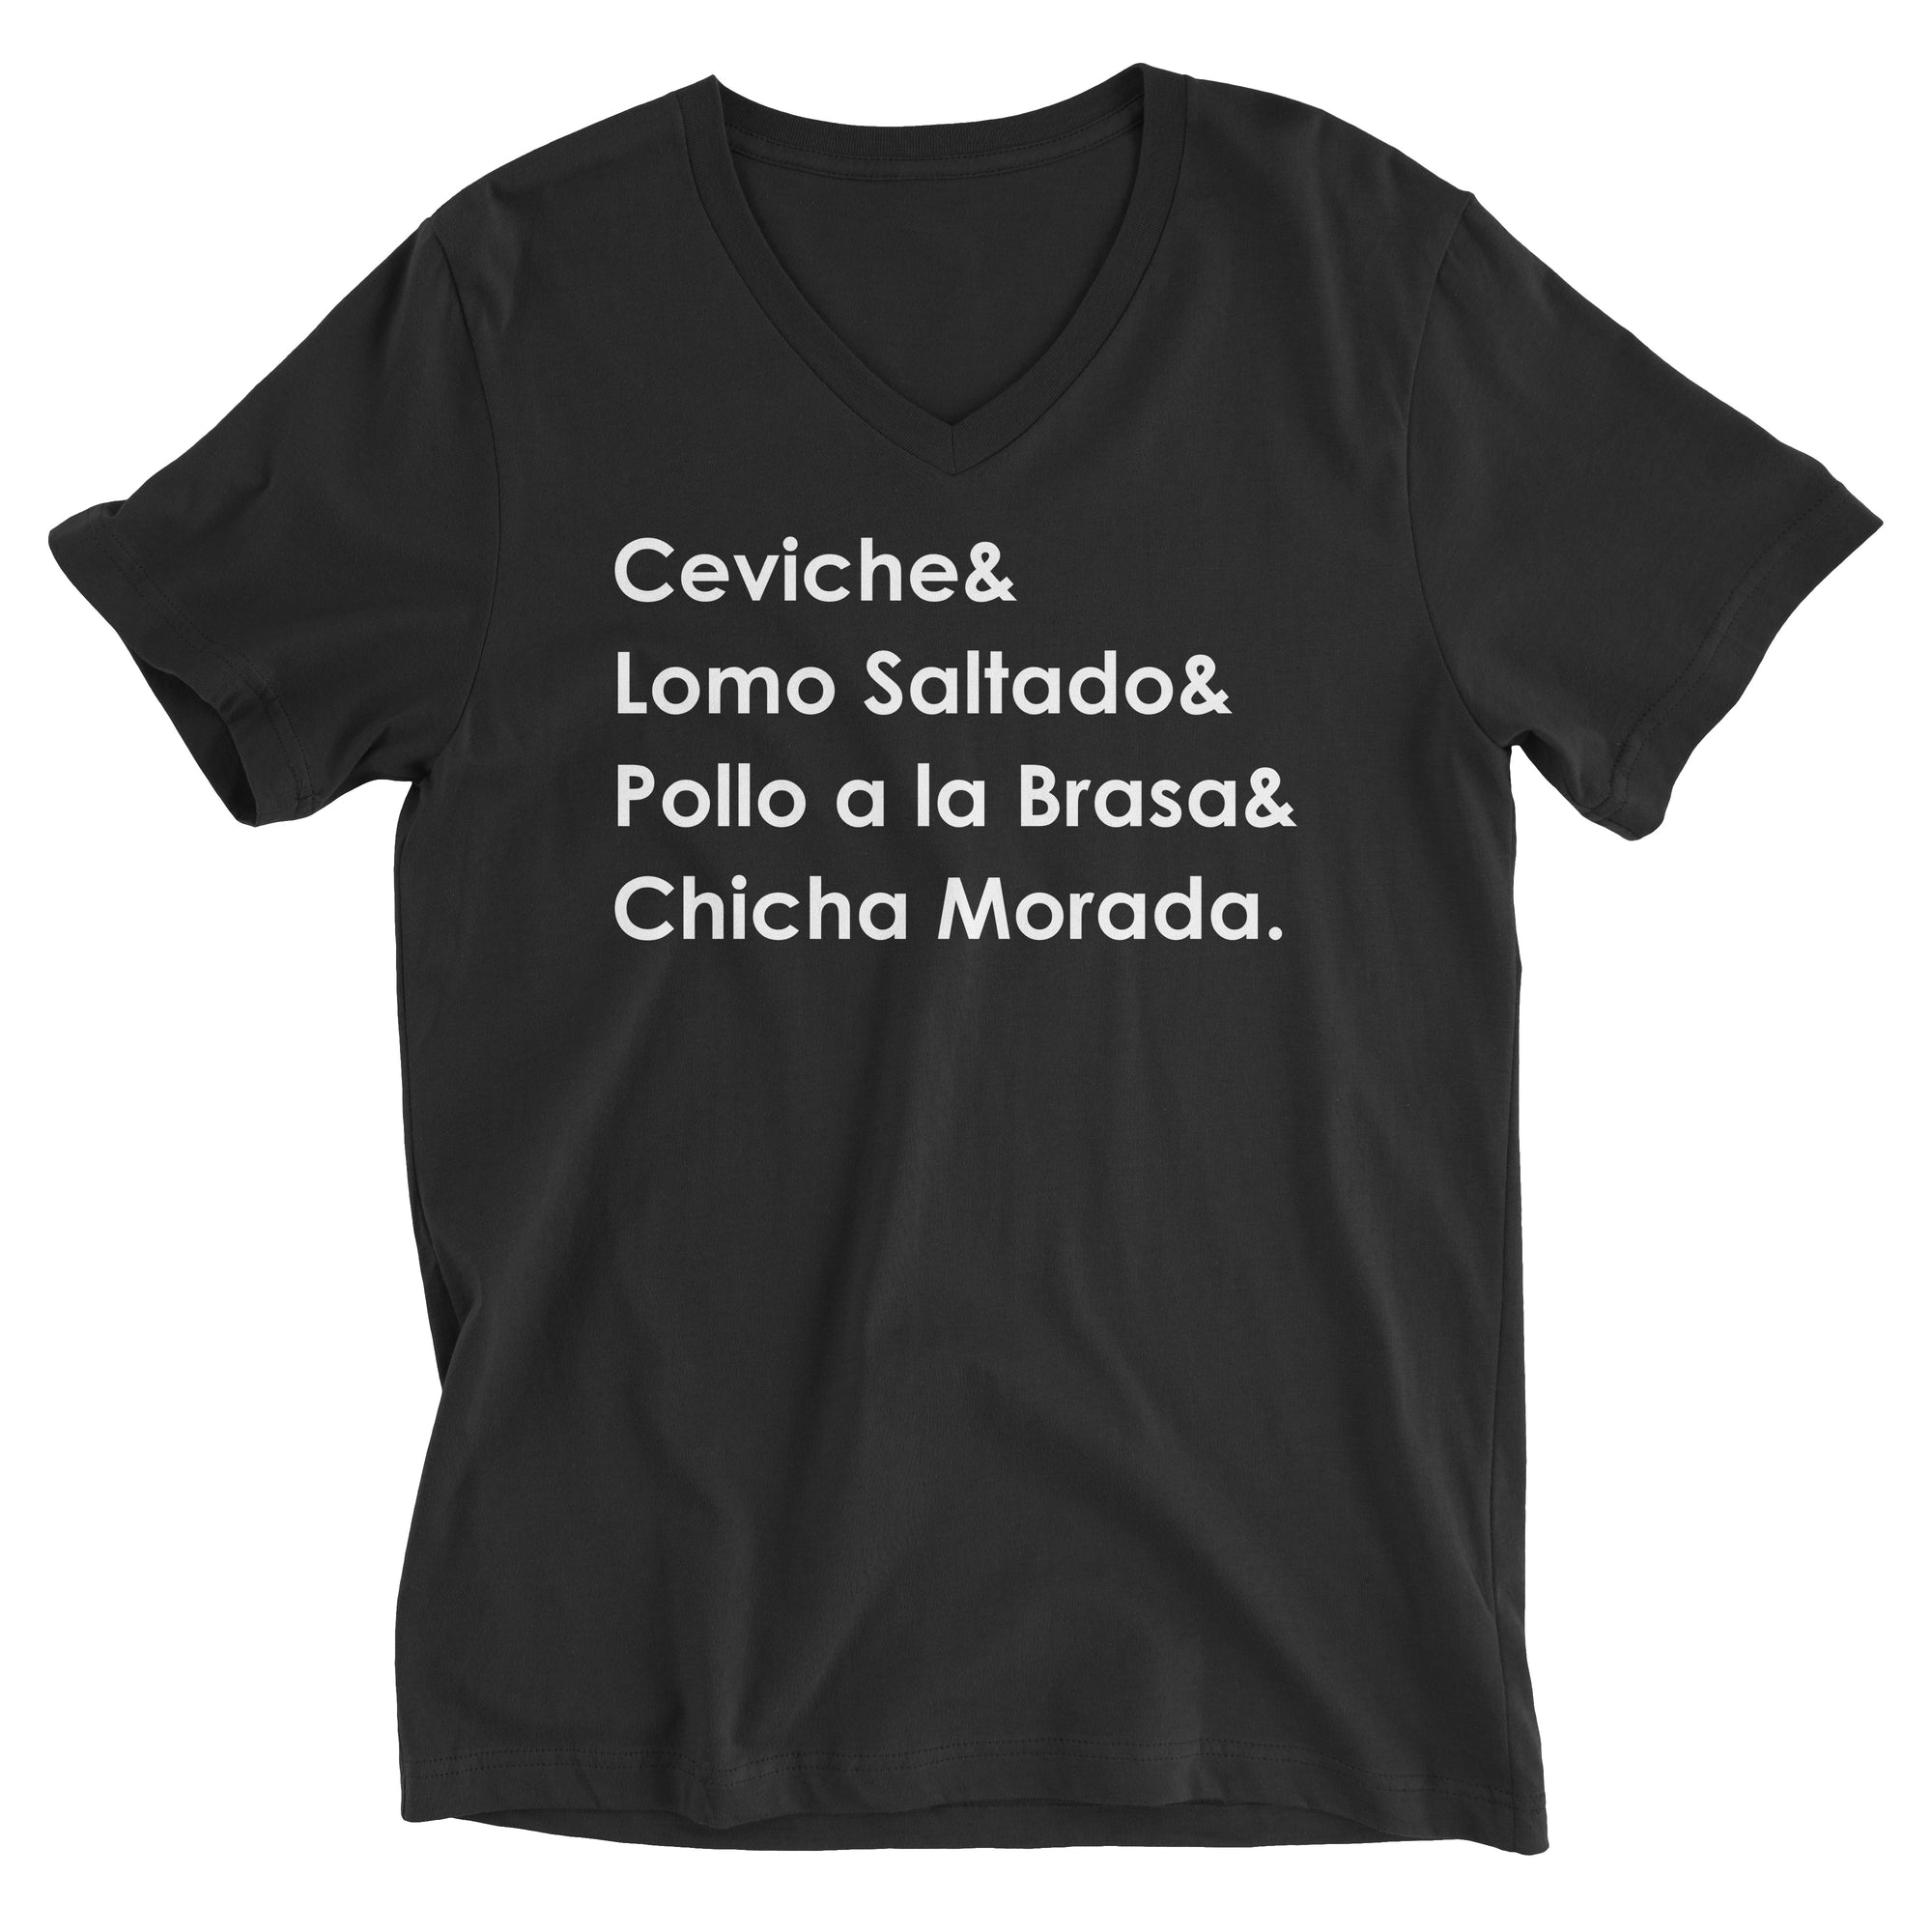 Peruvian Food Black V-Neck T-Shirt - Ceviche, Lomo Saltado, Pollo a la Brasa, Chicha Morada